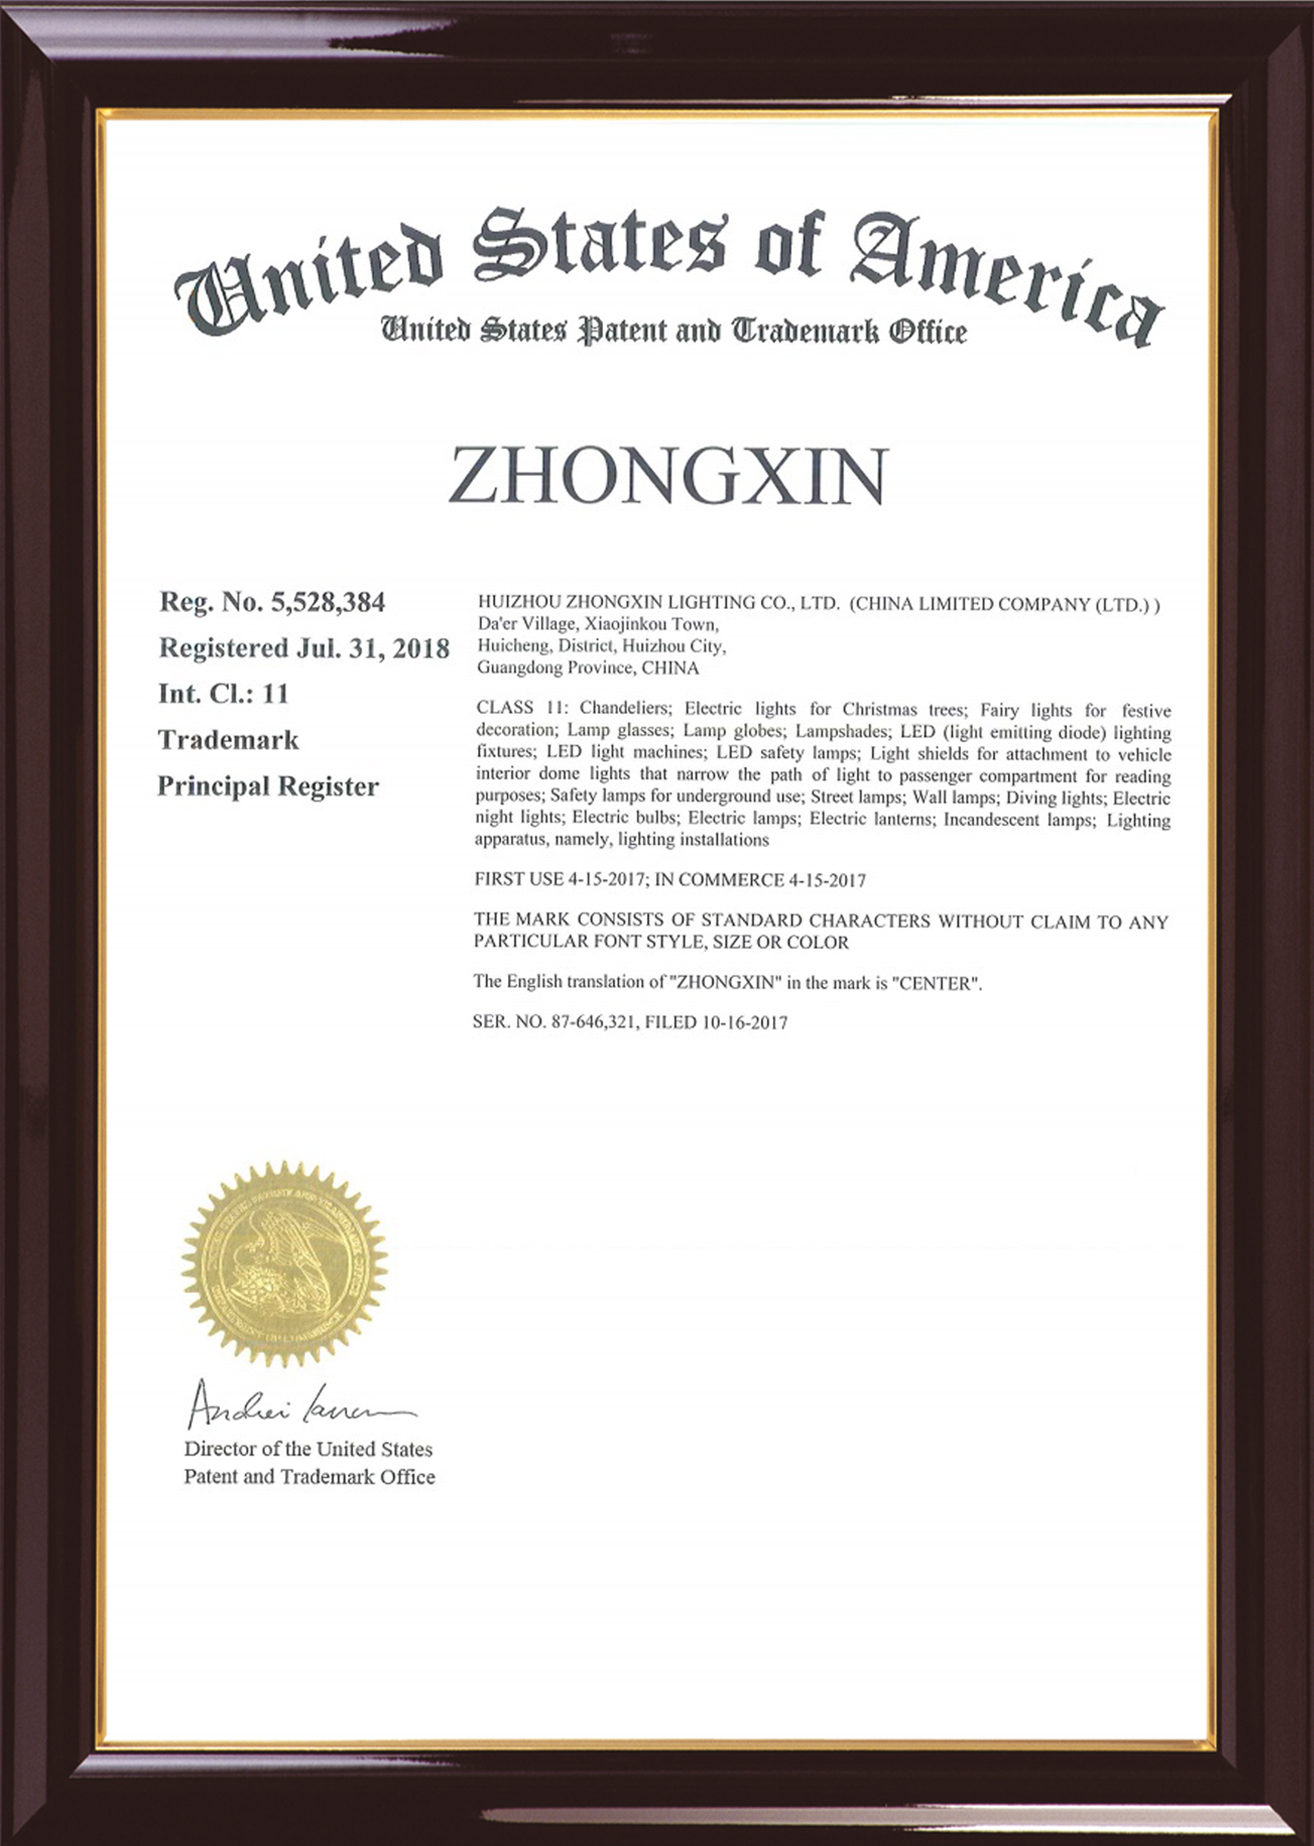 https://www.zhongxinlighting.com/about-us/certifications/